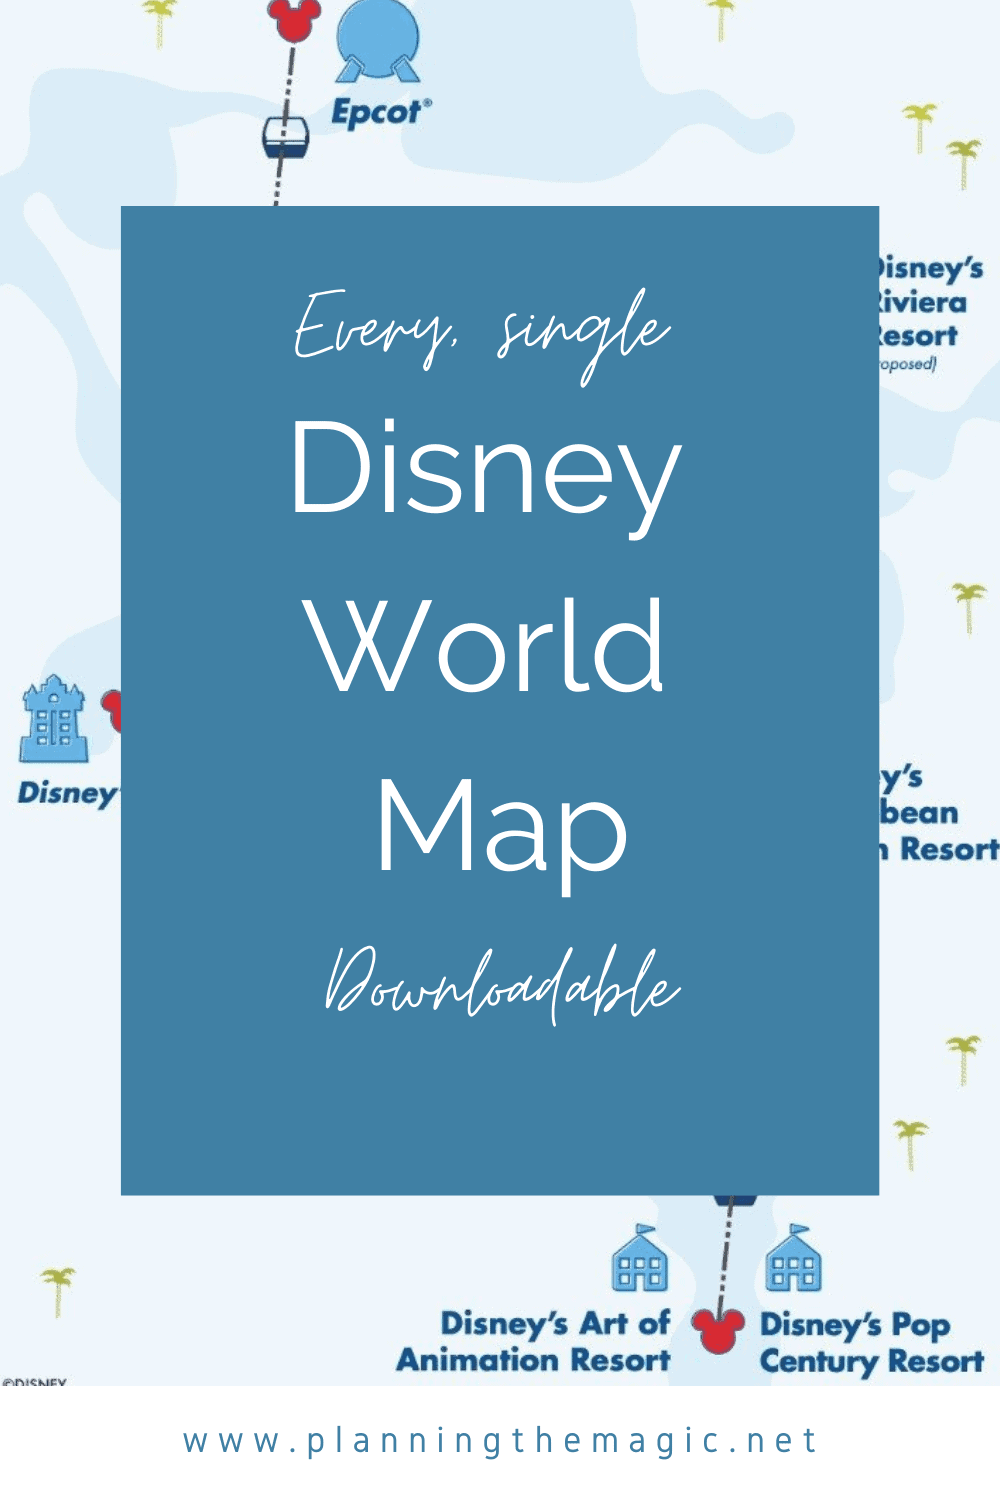 NEW 2020 Walt Disney World Coronado Springs Resort Map 5 Theme Park Guide Maps